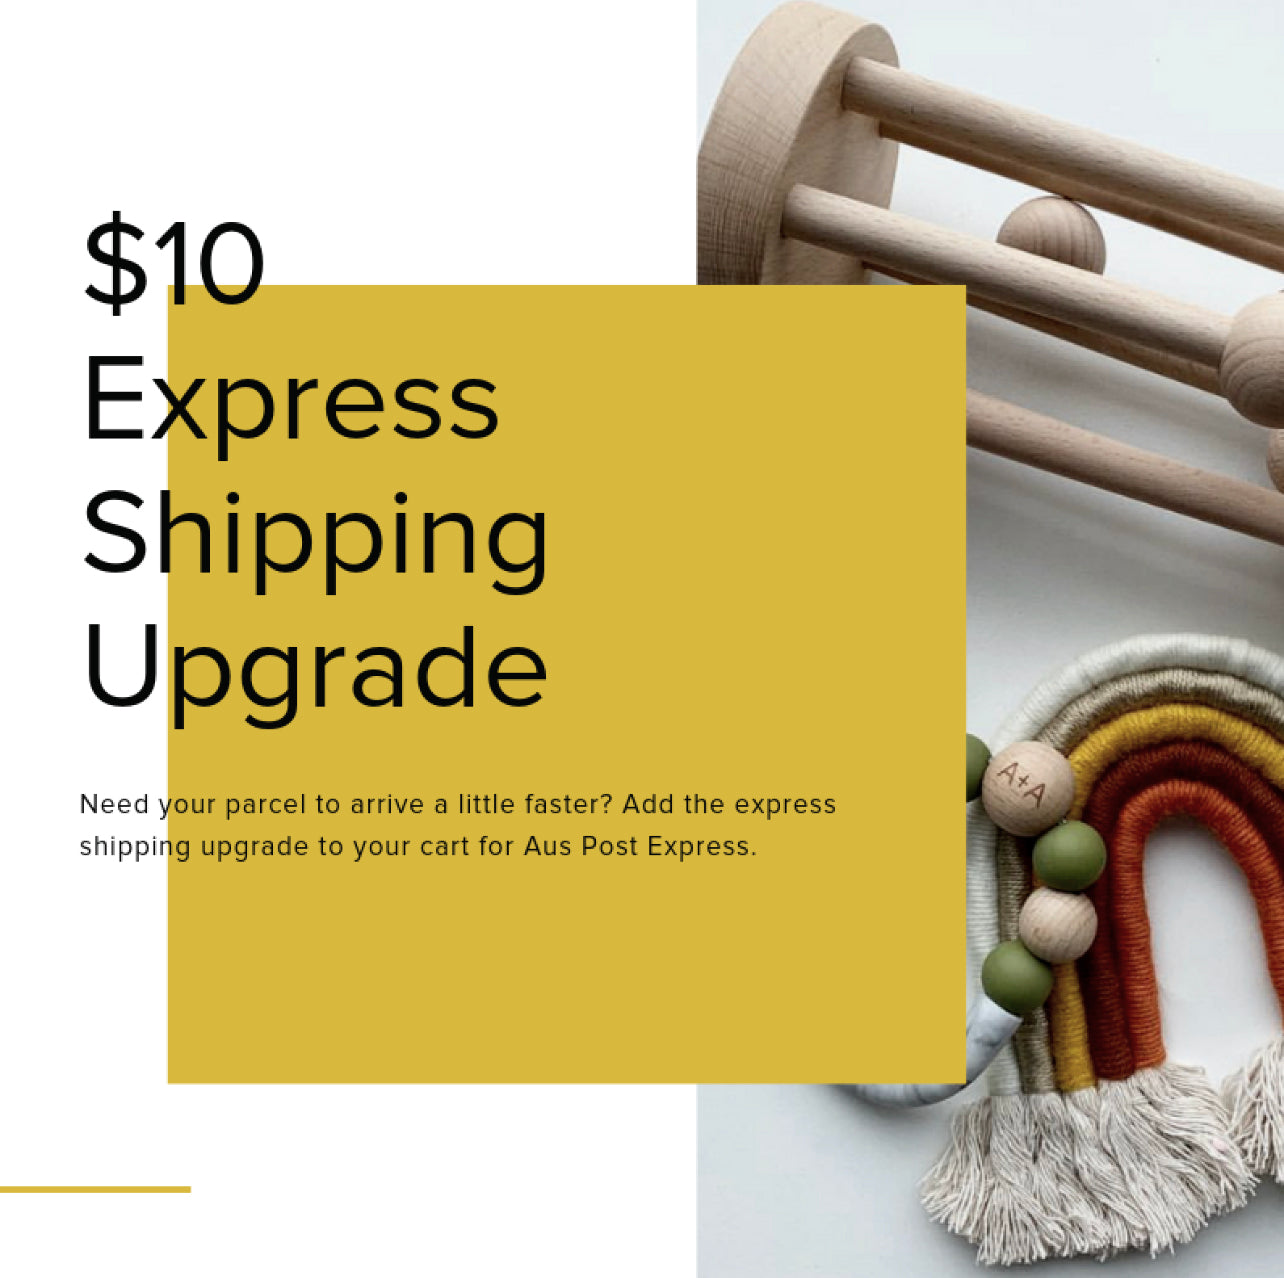 Add Express Shipping Upgrade